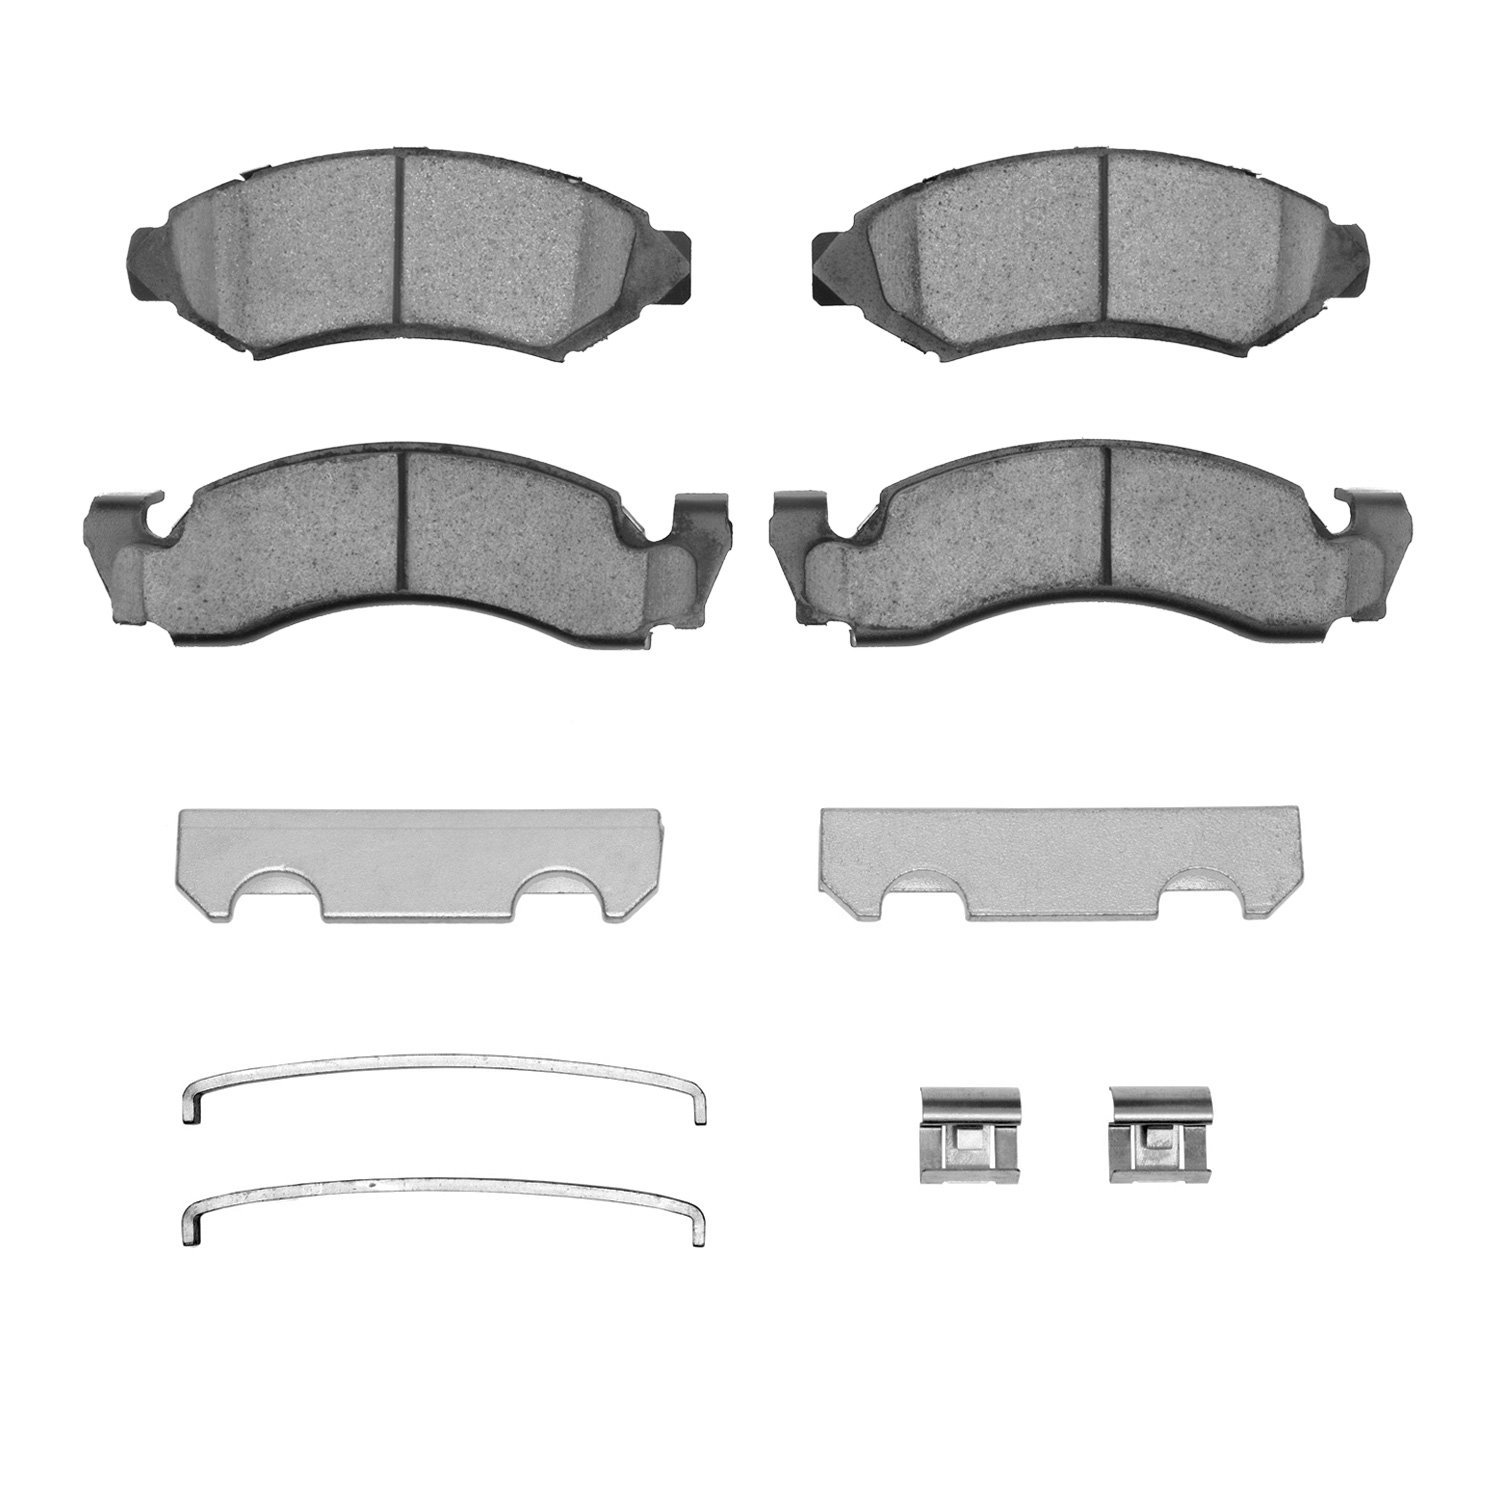 Optimum OE Brake Pads & Hardware Kit, 1973-1985 Fits Multiple Makes/Models, Position: Front